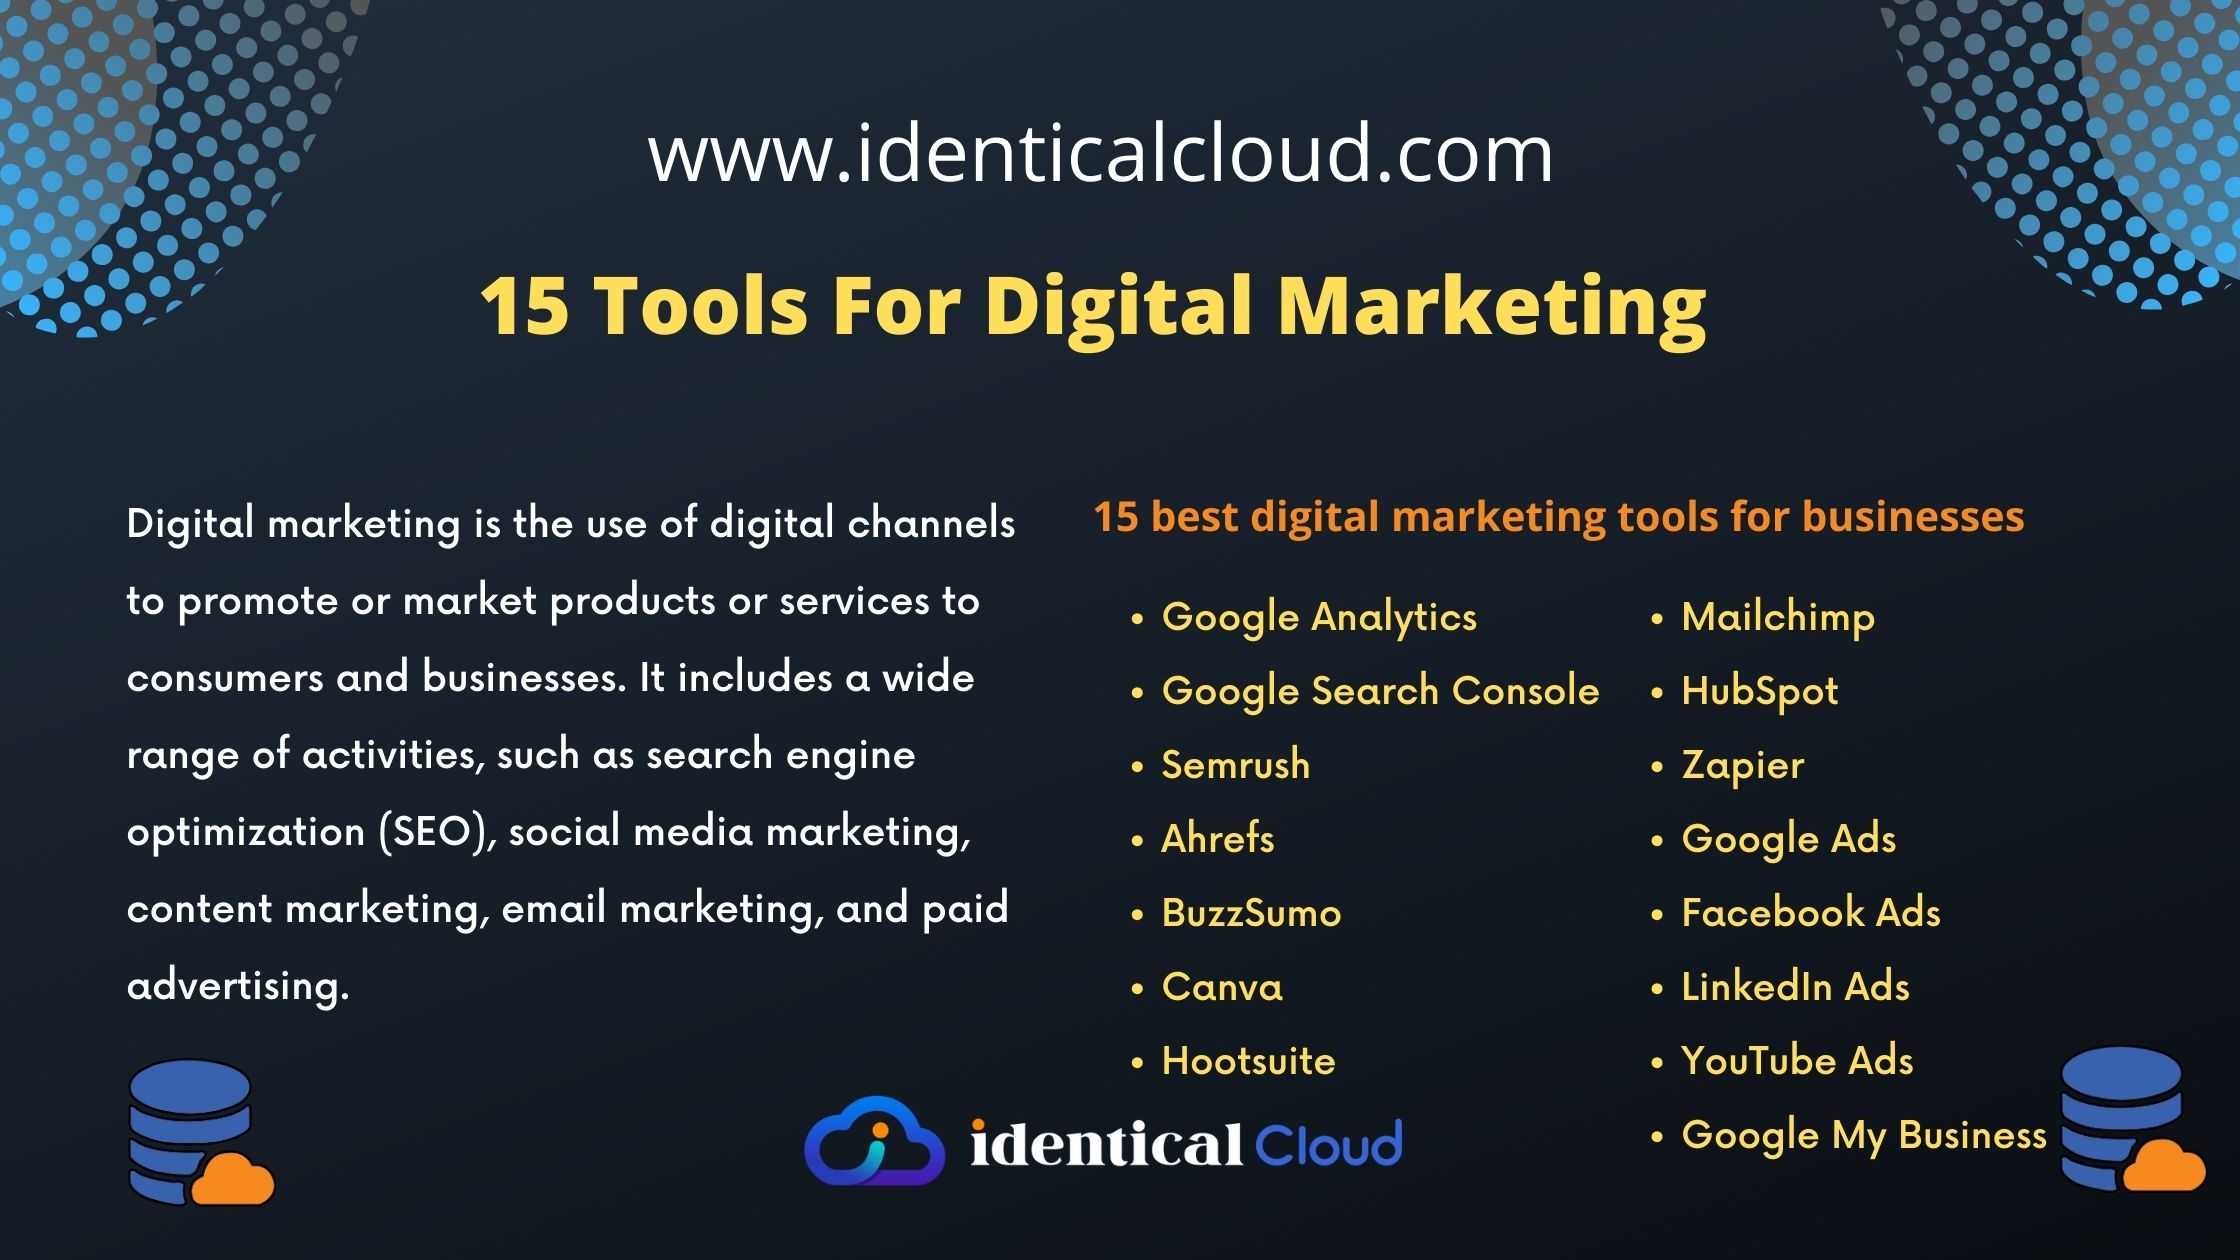 15 Tools For Digital Marketing - identicalcloud.com